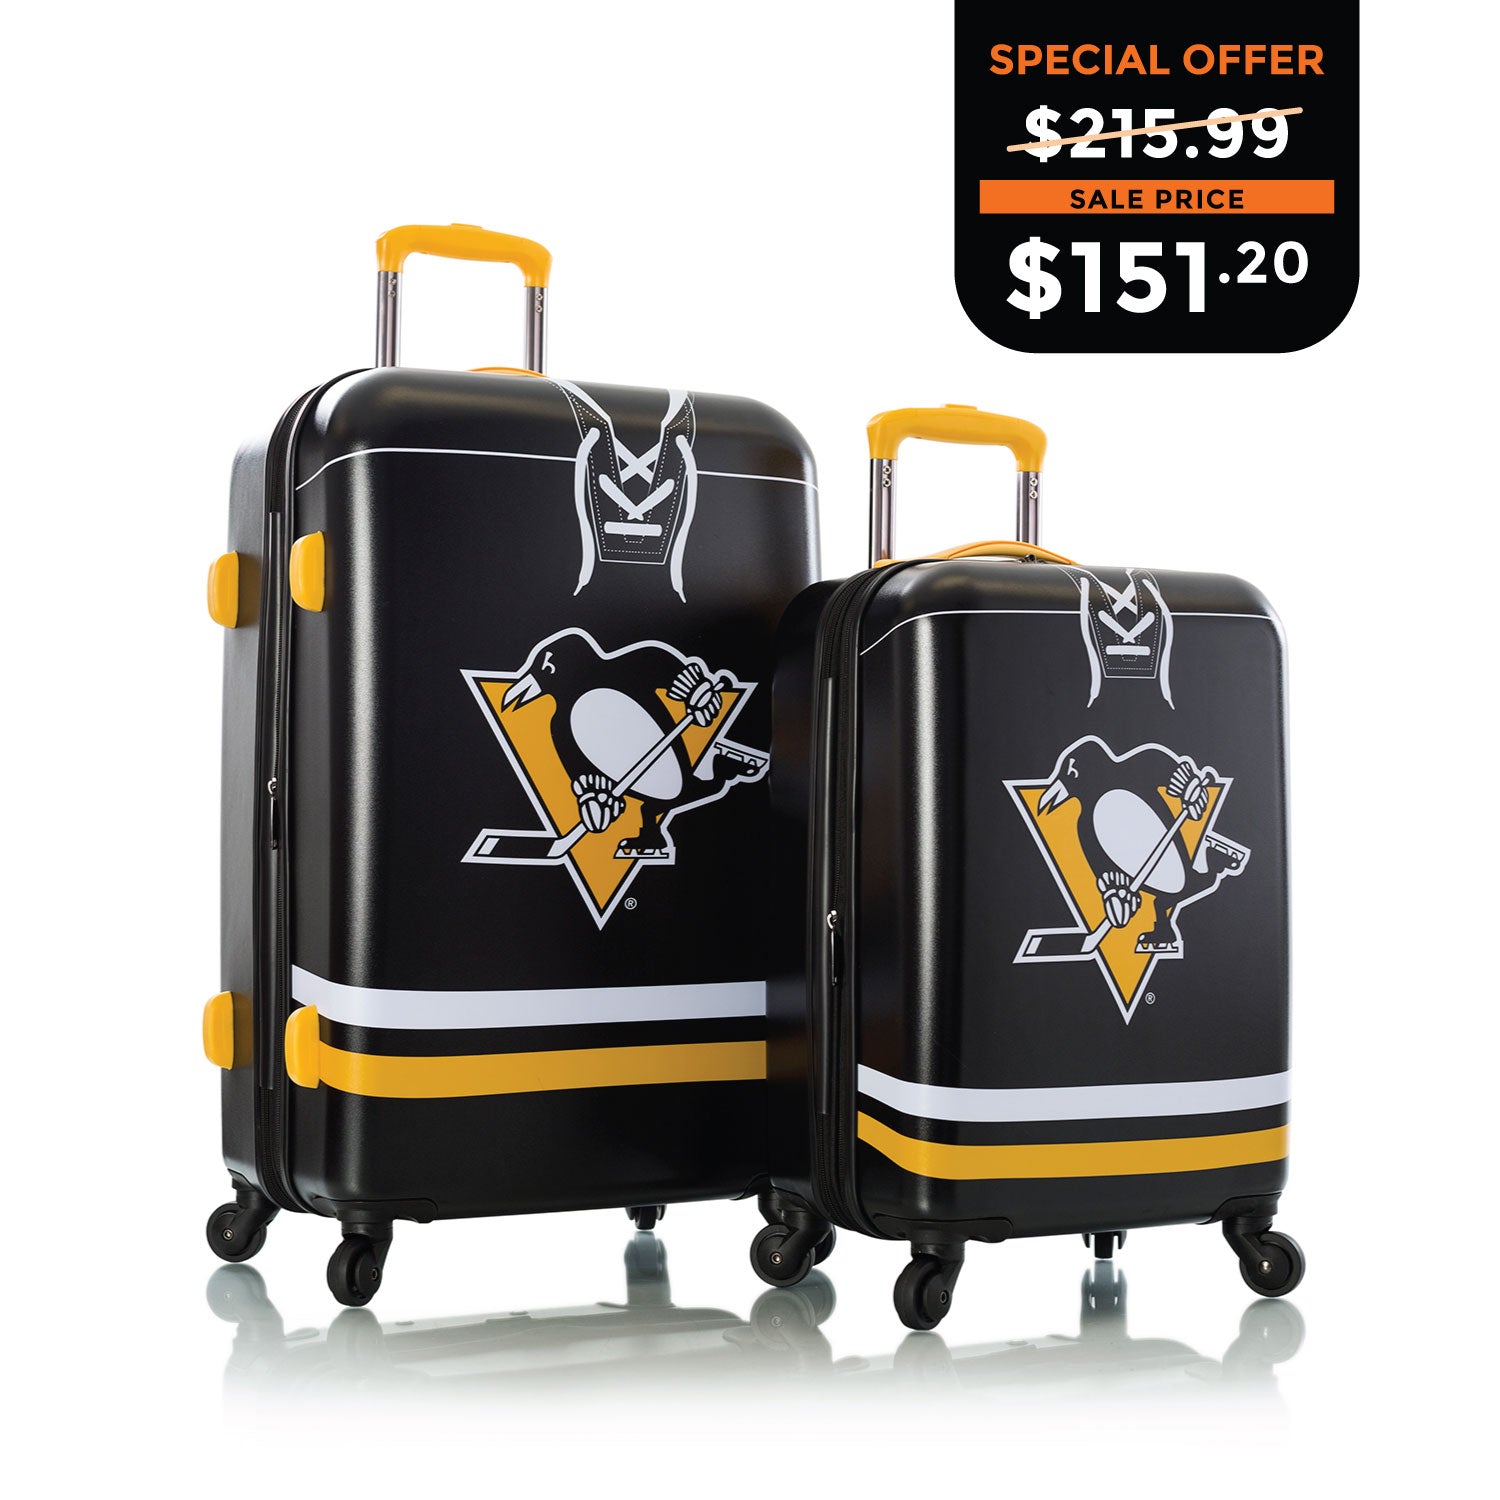 NHL Luggage 2pc. Set - Pittsburgh Penguins